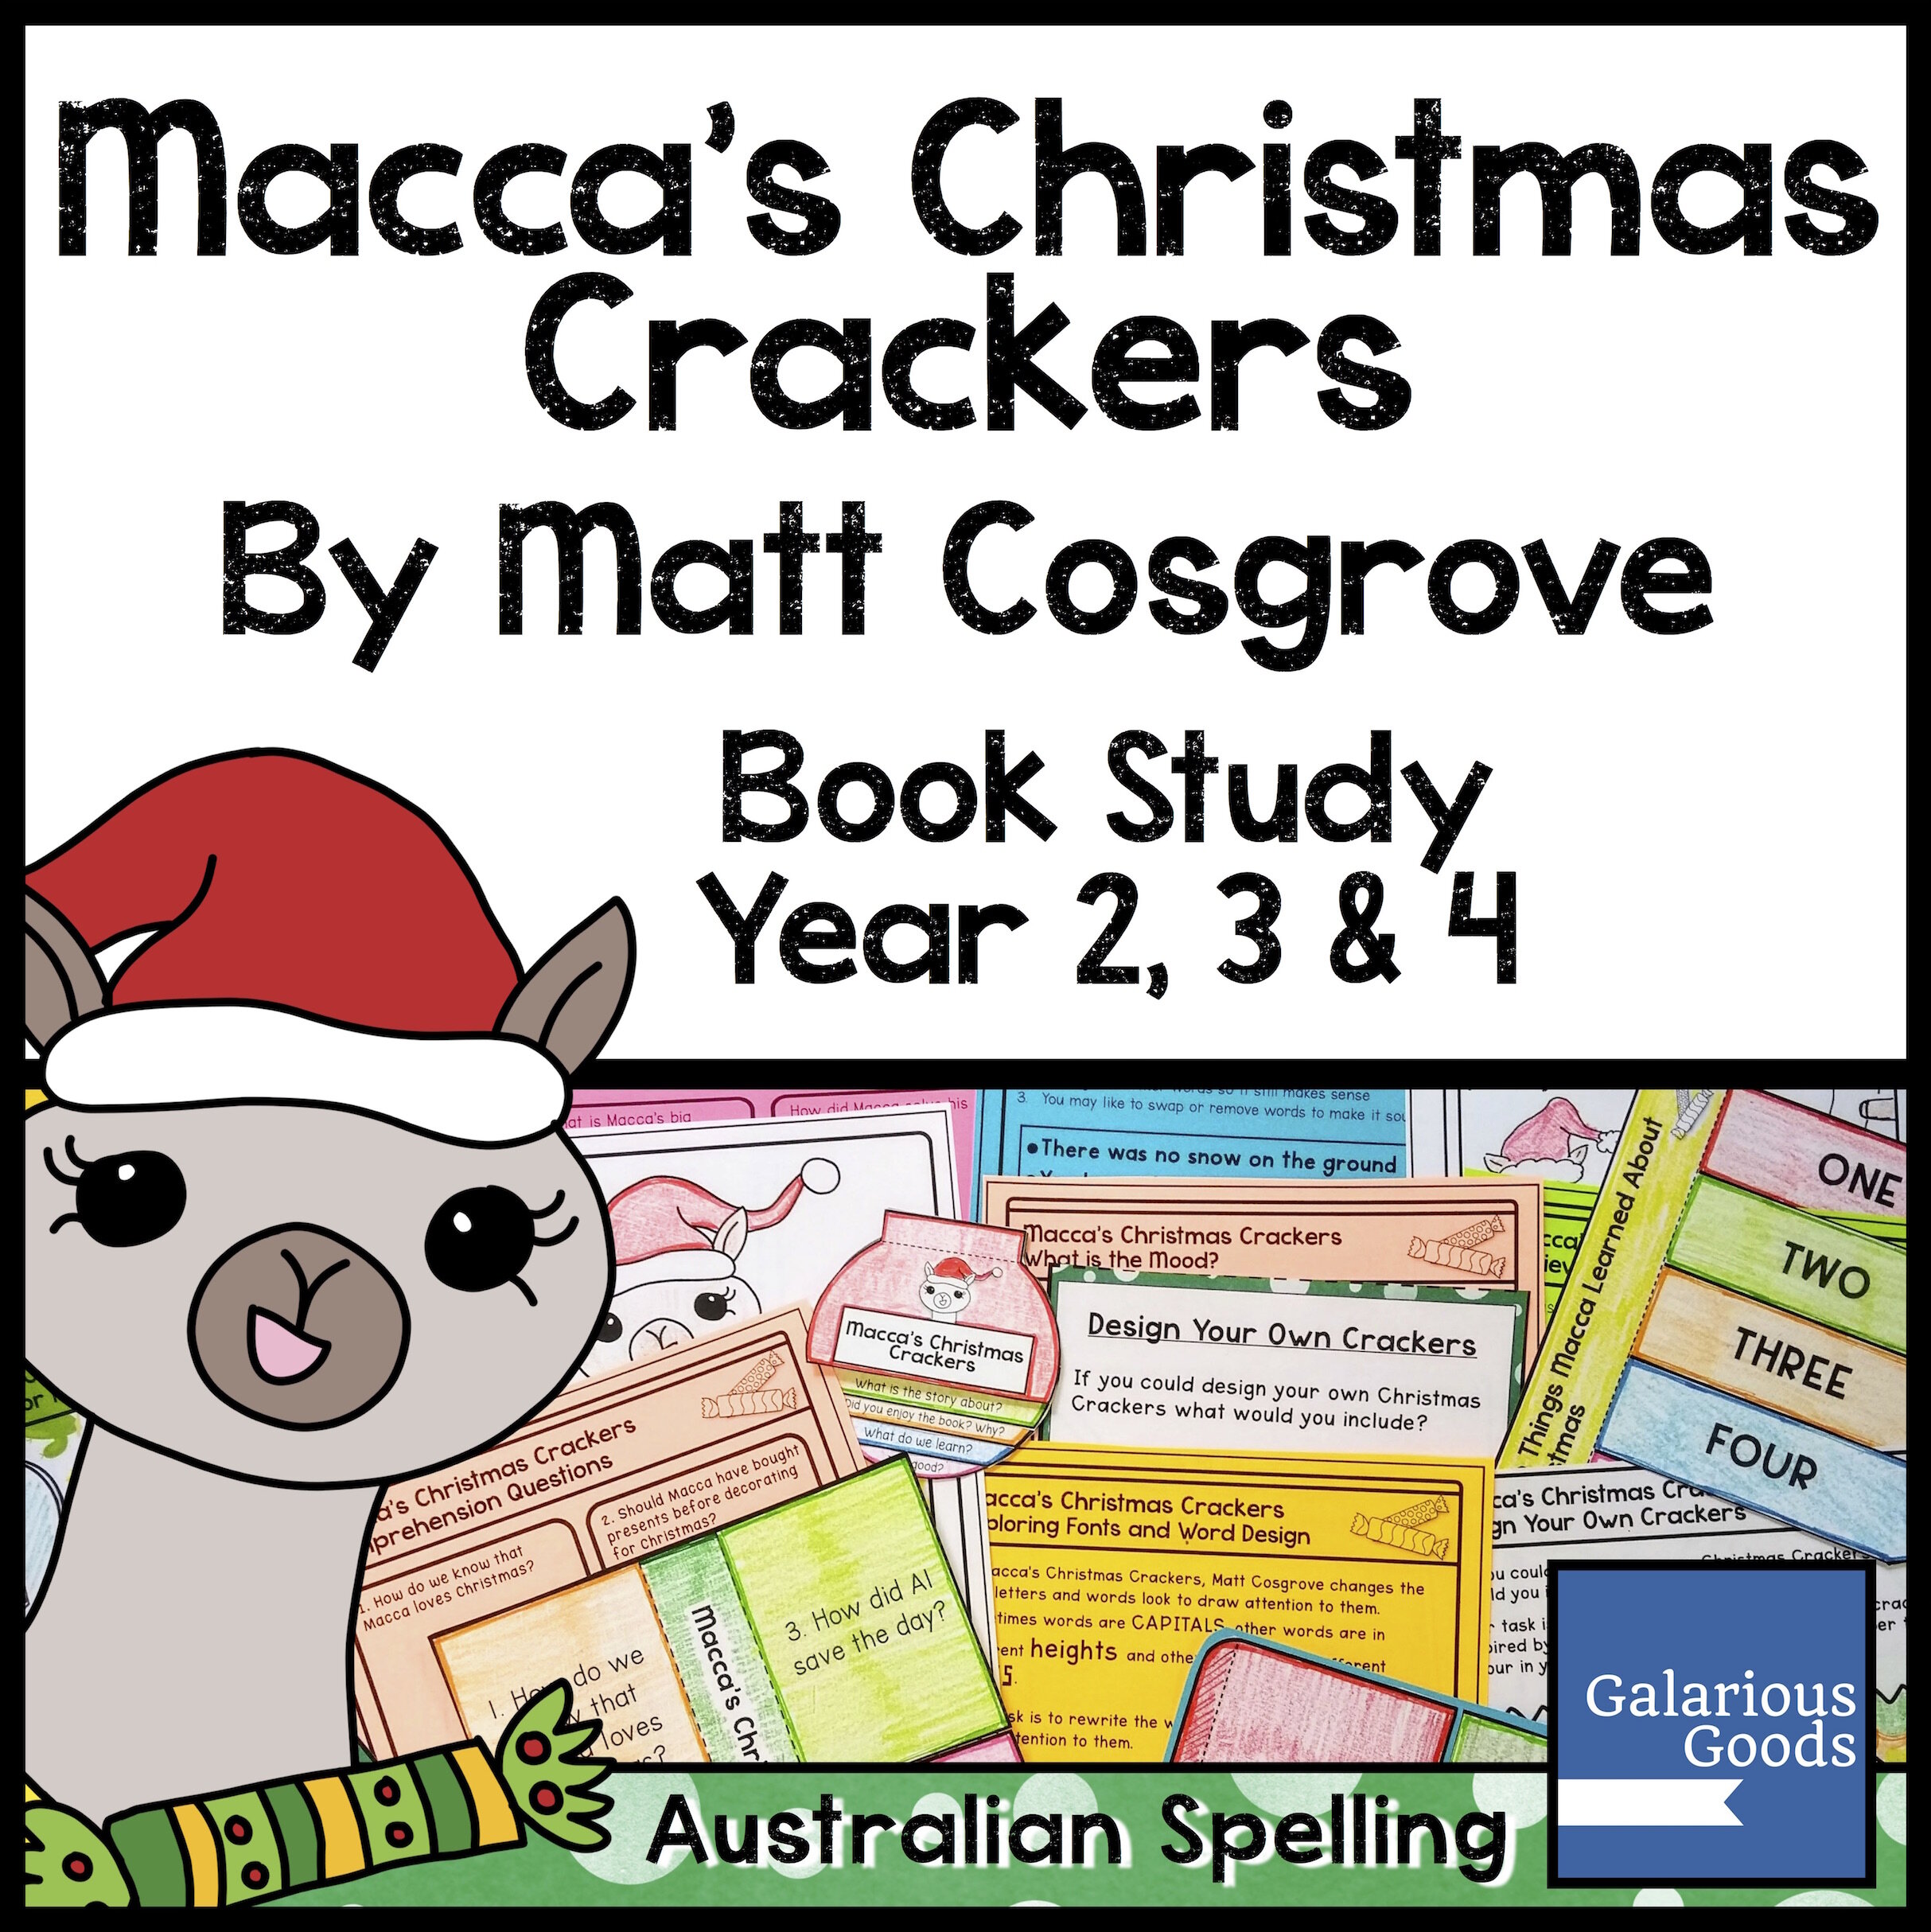 cover maccas christmas crackers.jpg